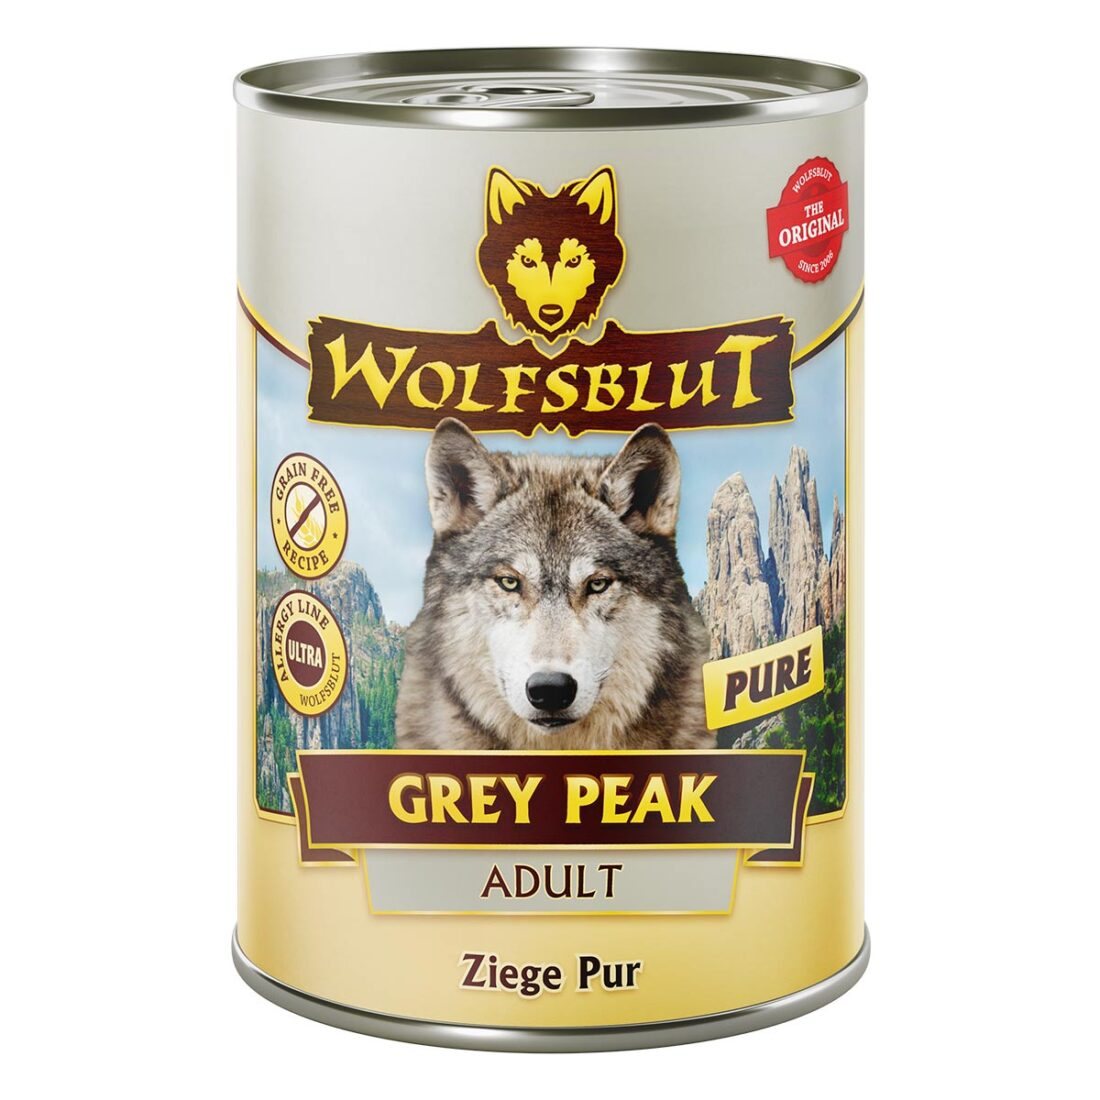 Wolfsblut Grey Peak pure 6